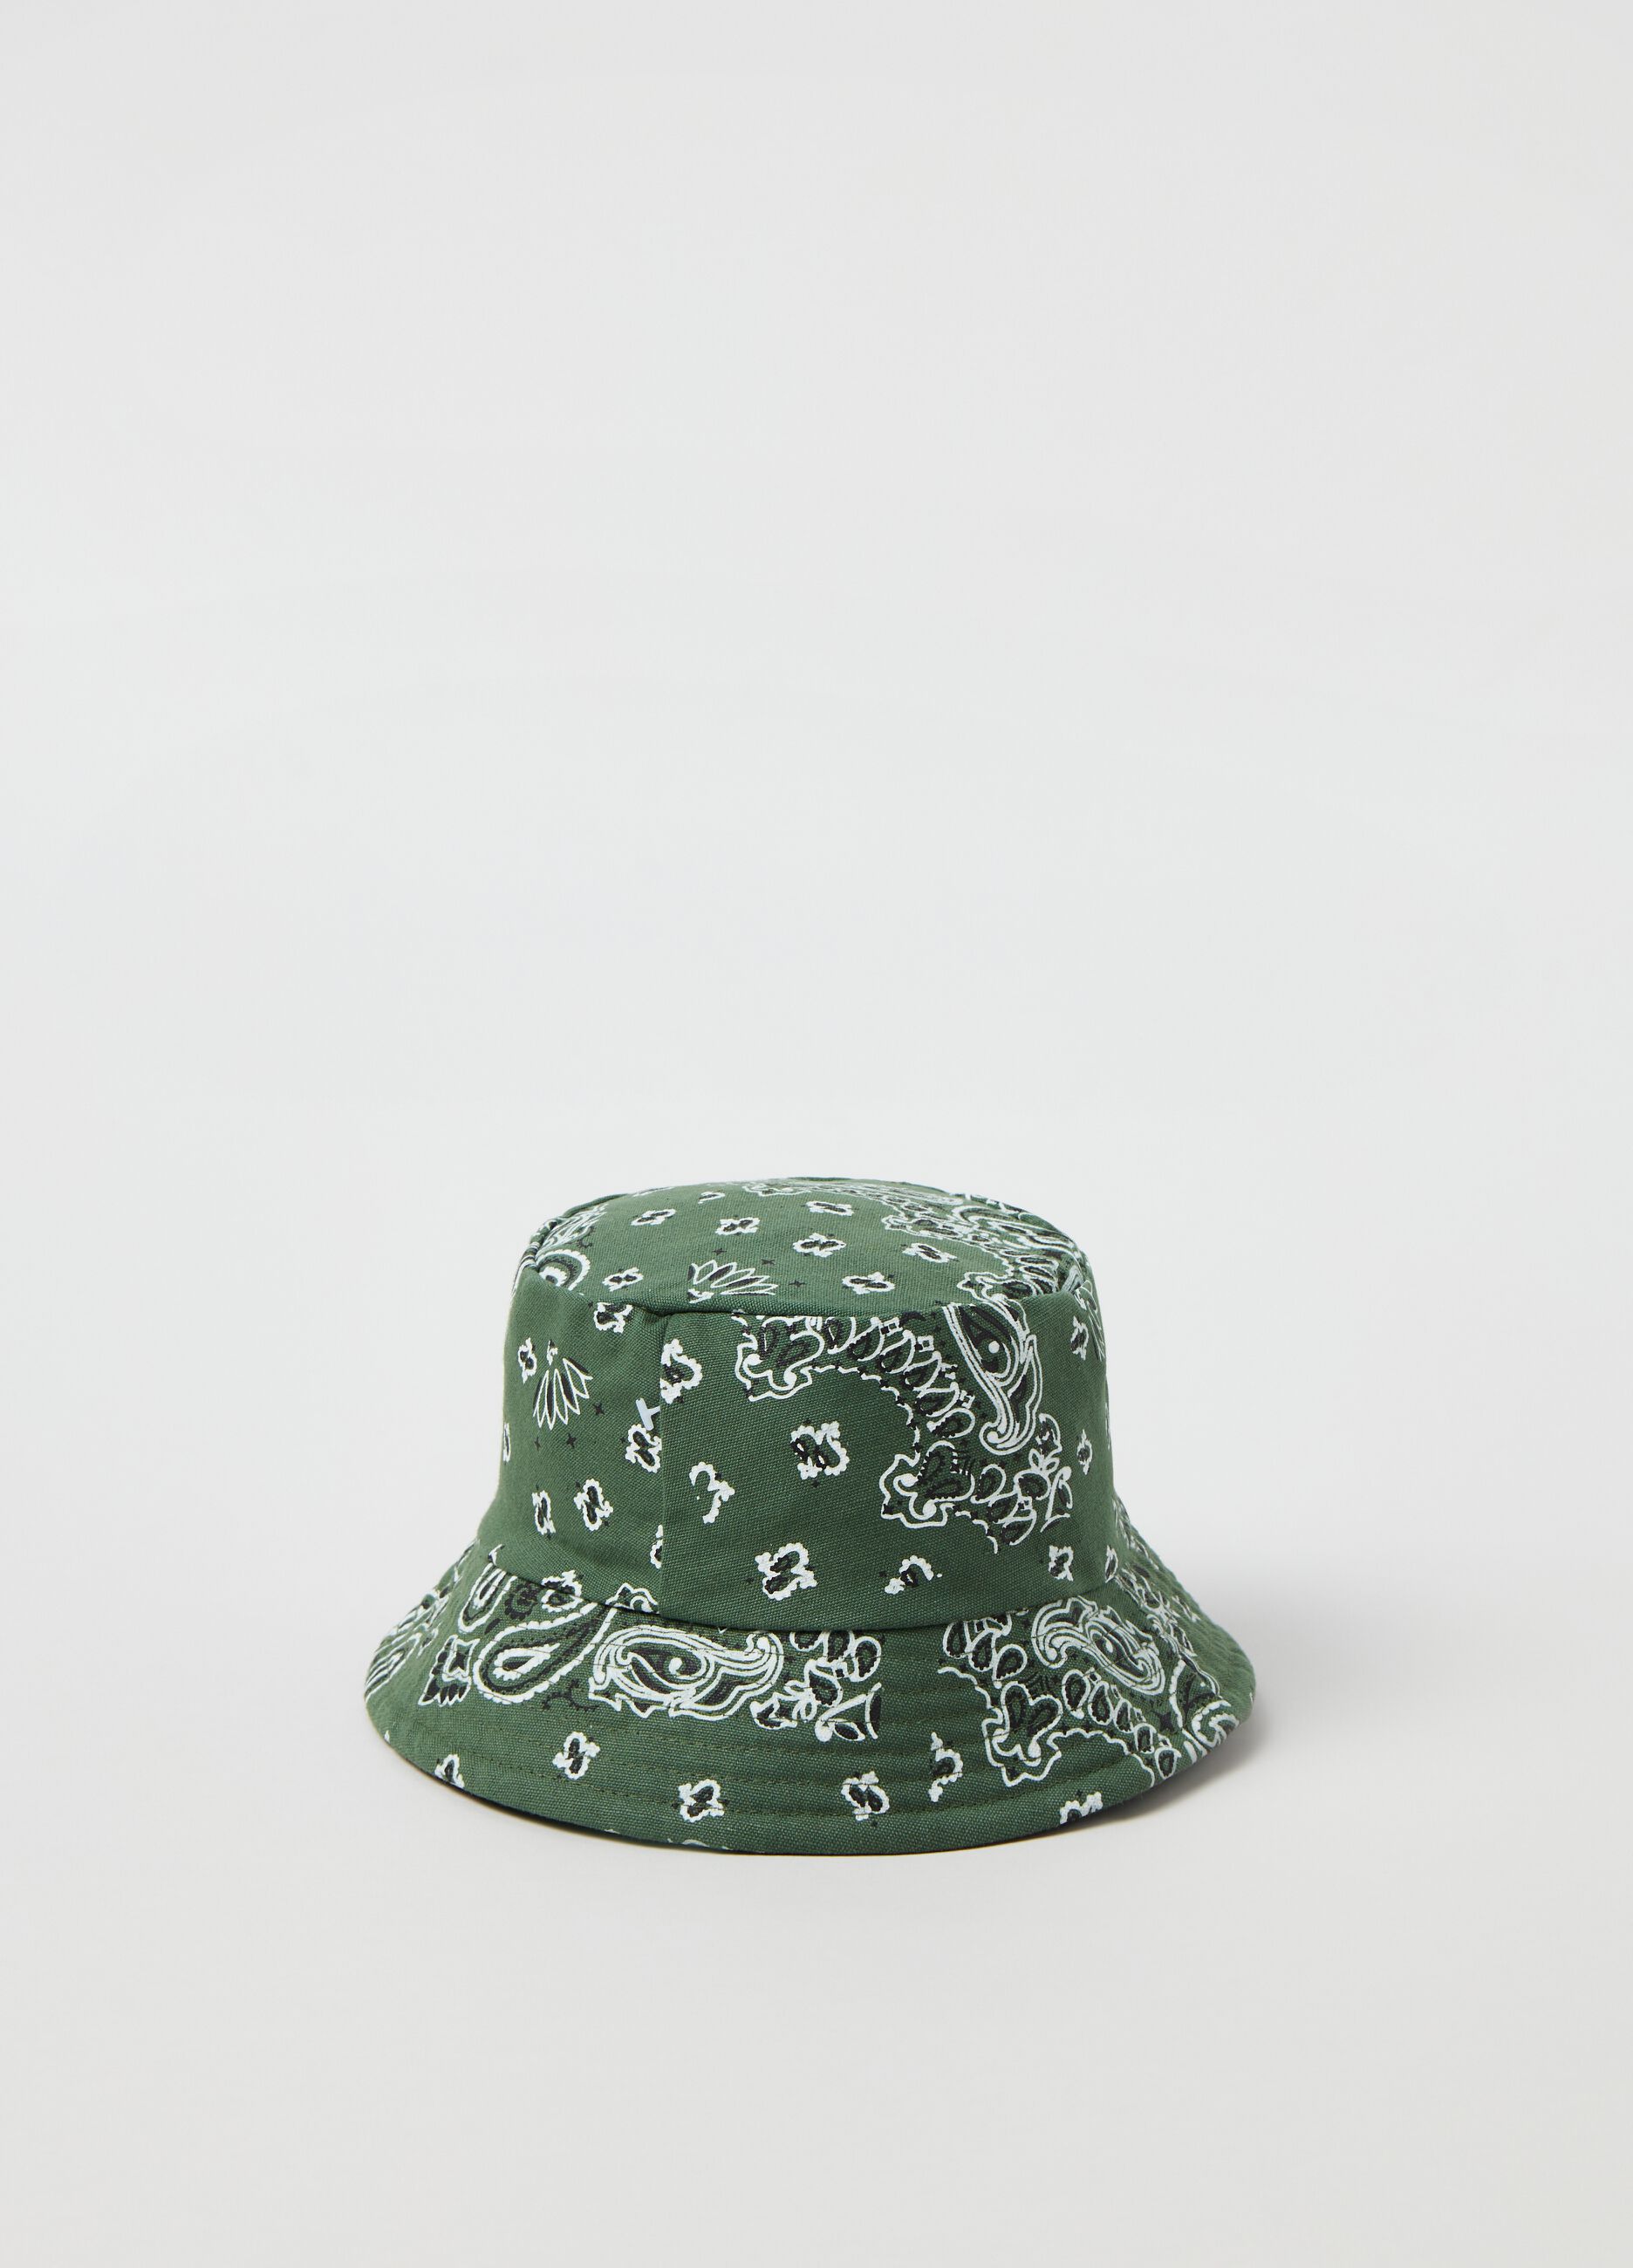 Fishing hat with bandana print